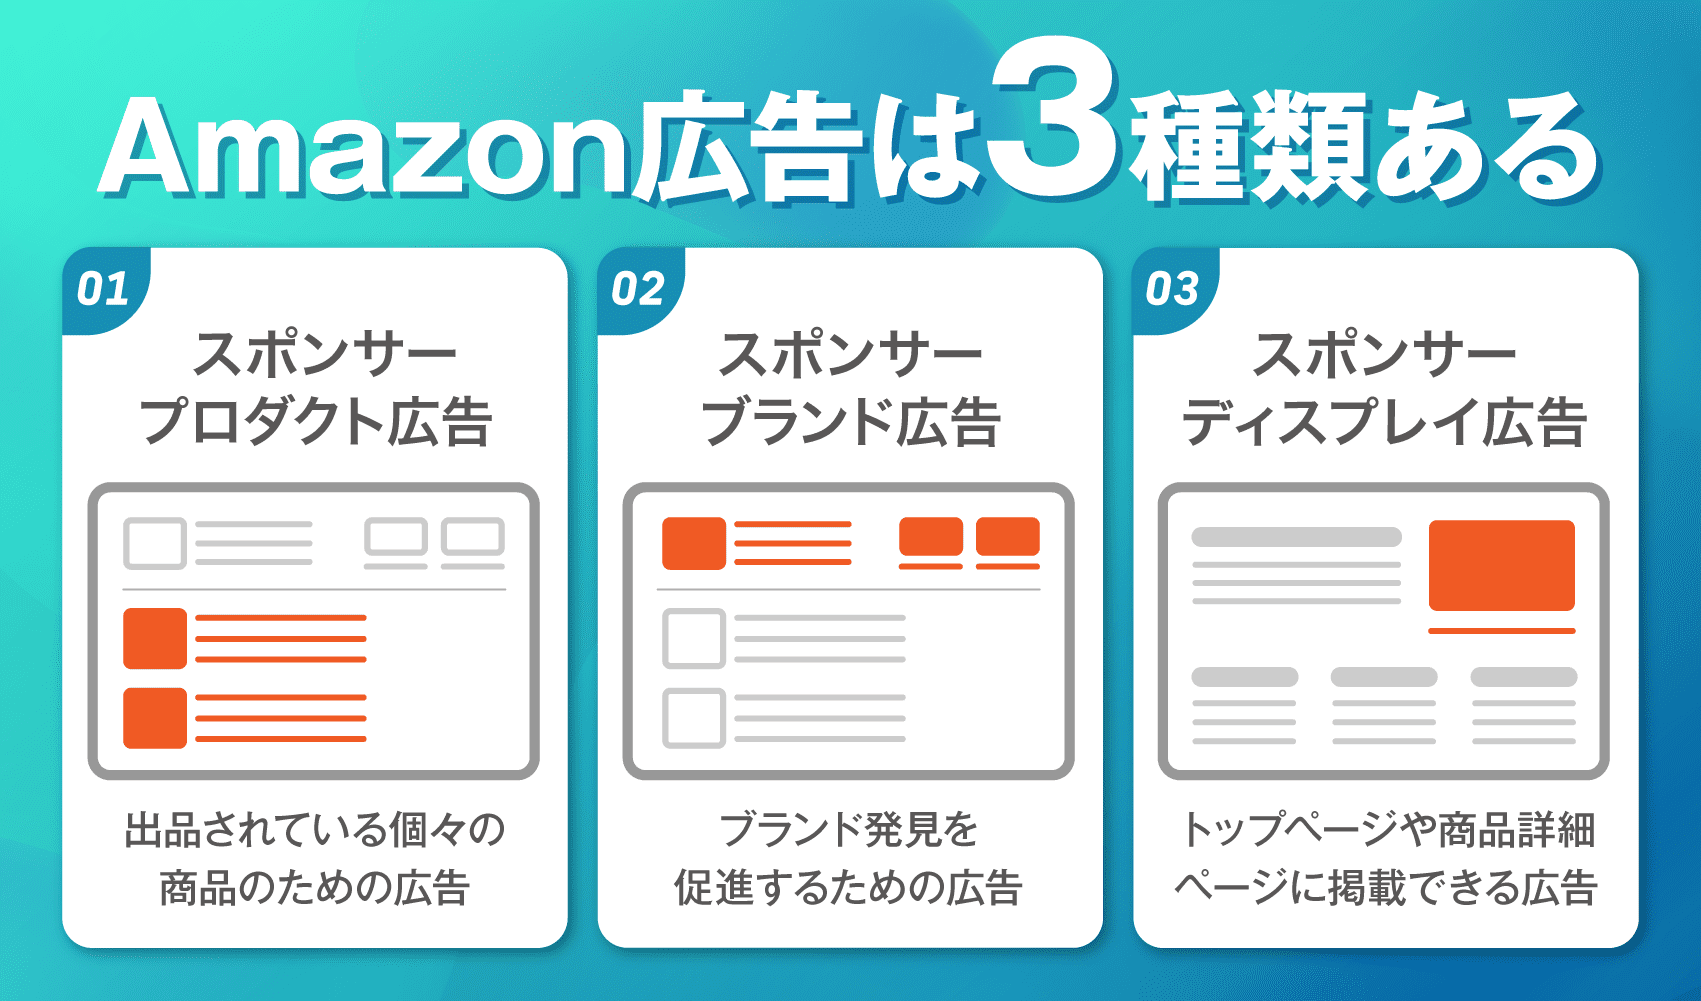 Amazon広告は3種類ある
